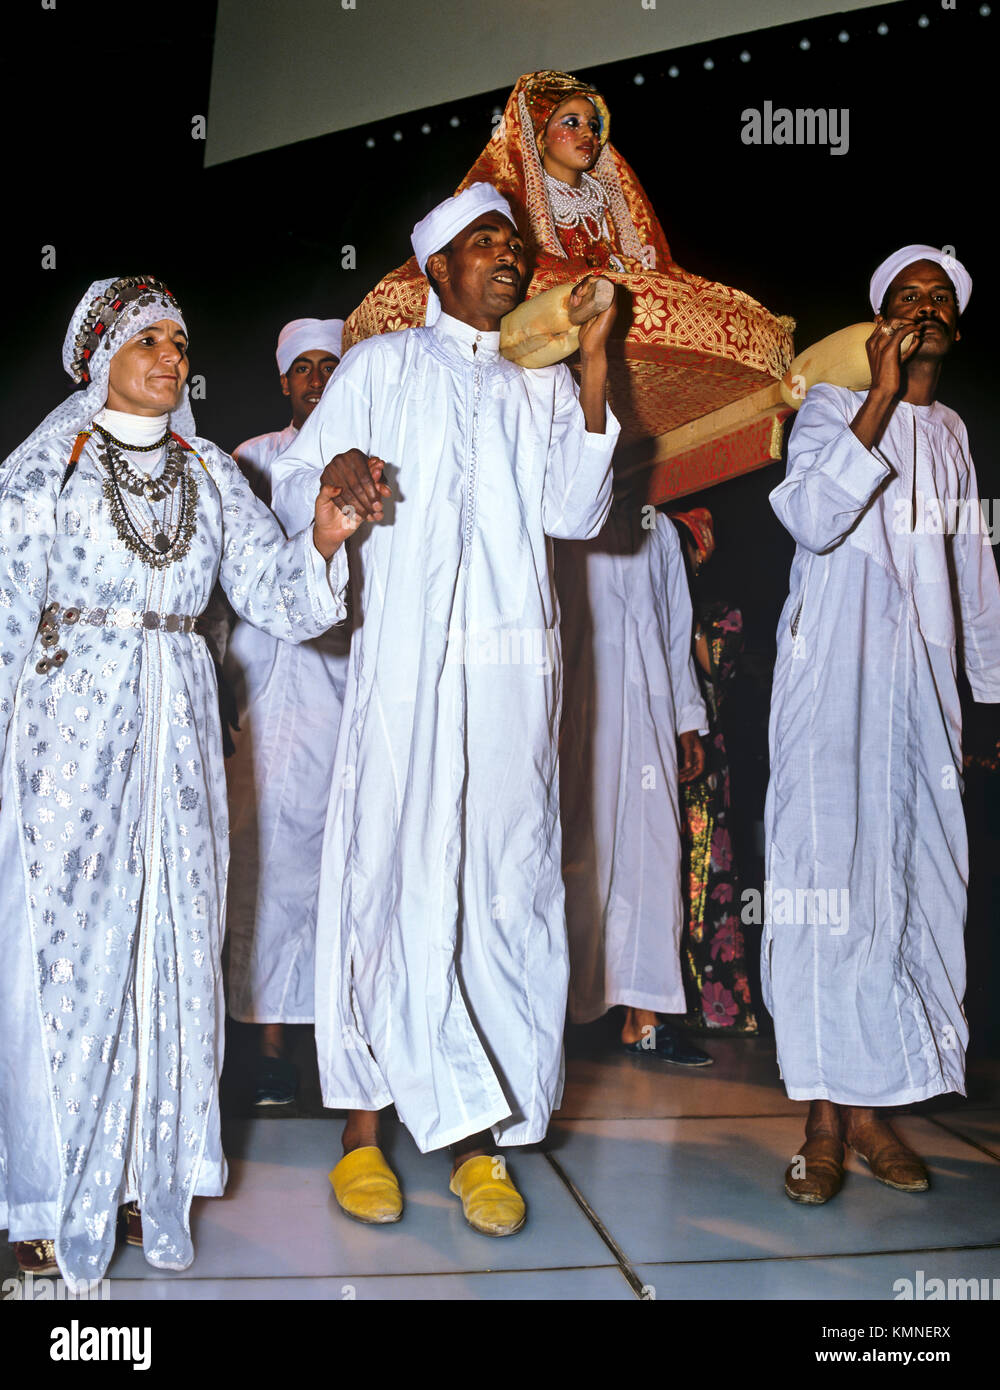 8730. Folklore Show, Berber Hochzeit, Agadir, Marokko Stockfotografie -  Alamy